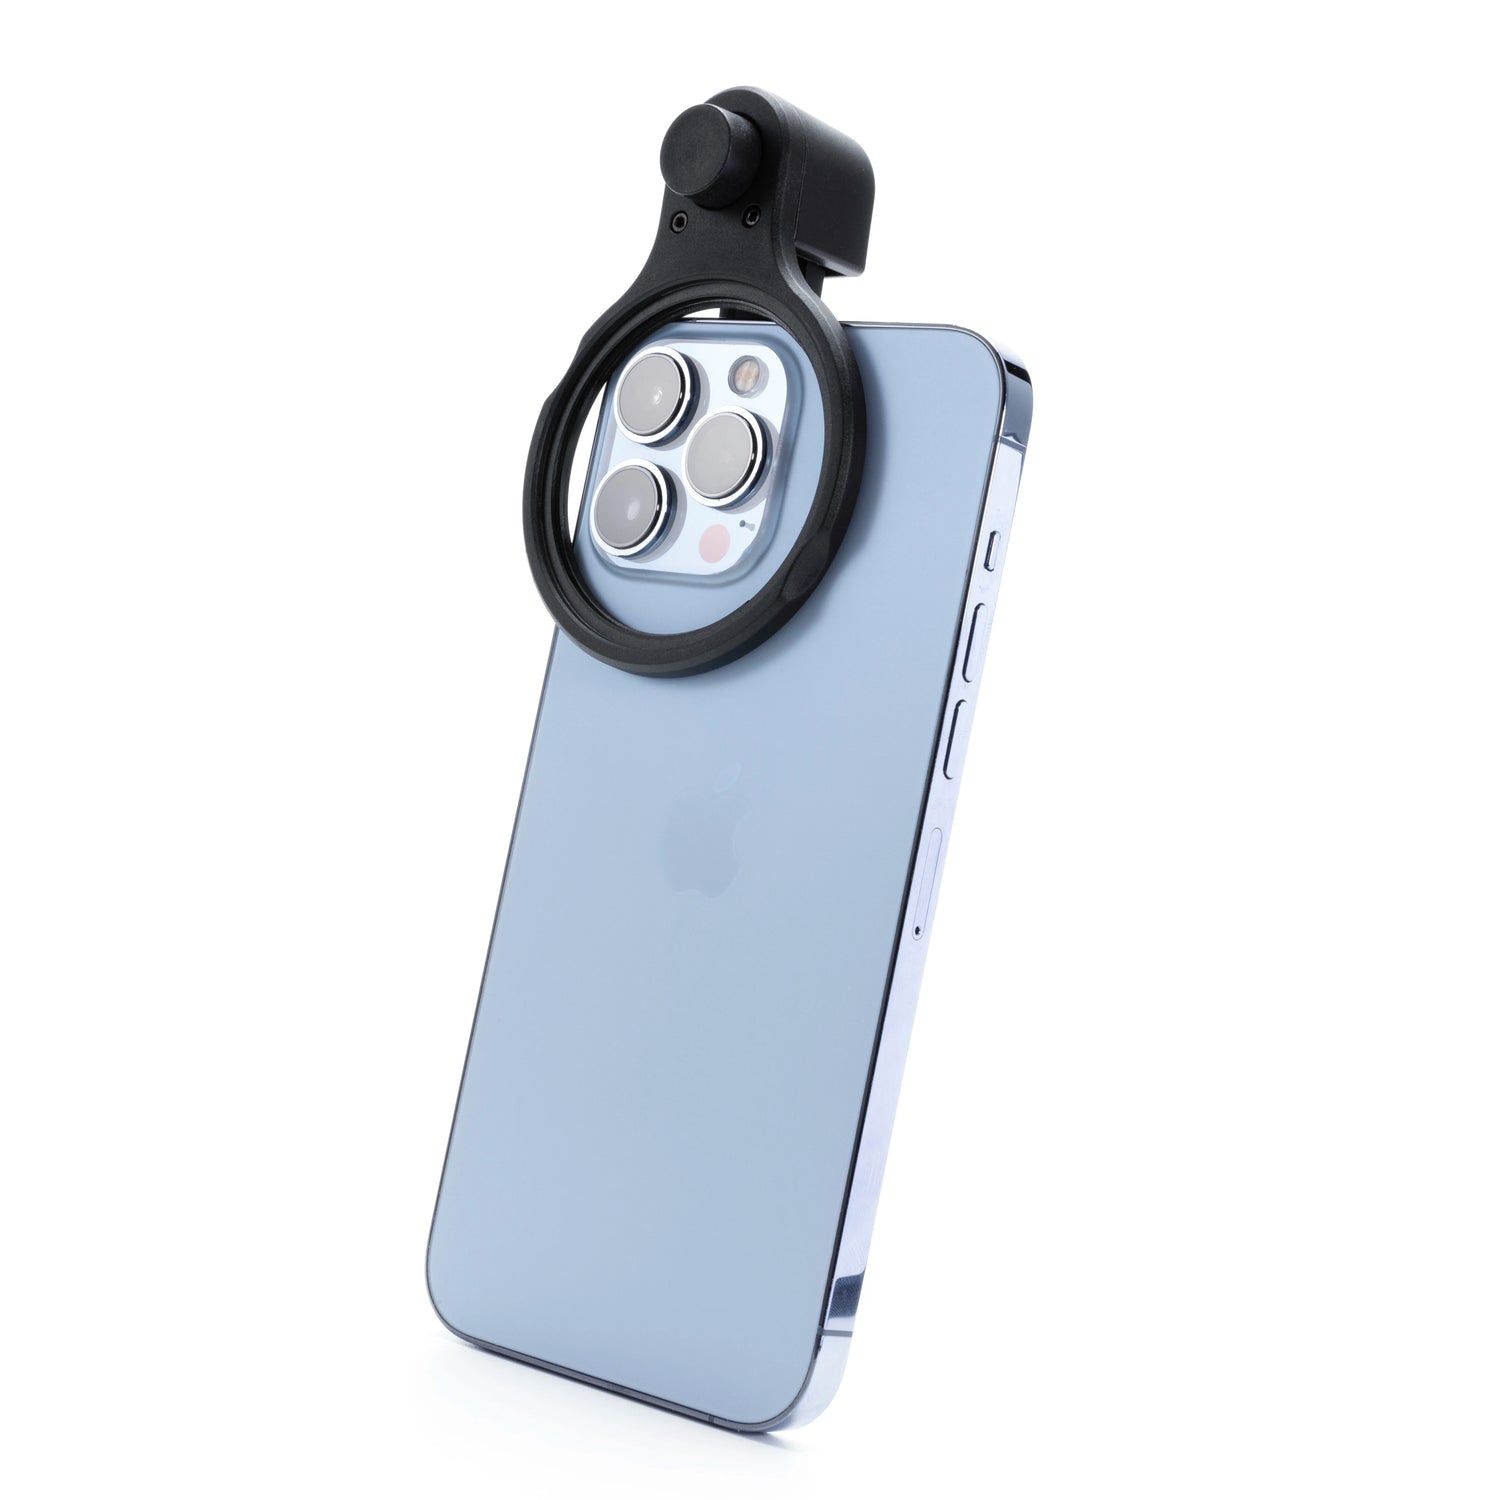 [New] Kase Magnetic 58mm Star Burst Filter for Mobile Filters - APEXEL INDIA - Mobile Lens - Mobile Camera Lens - Cellphone Accessories - Phone Lens - Smartphone Lens